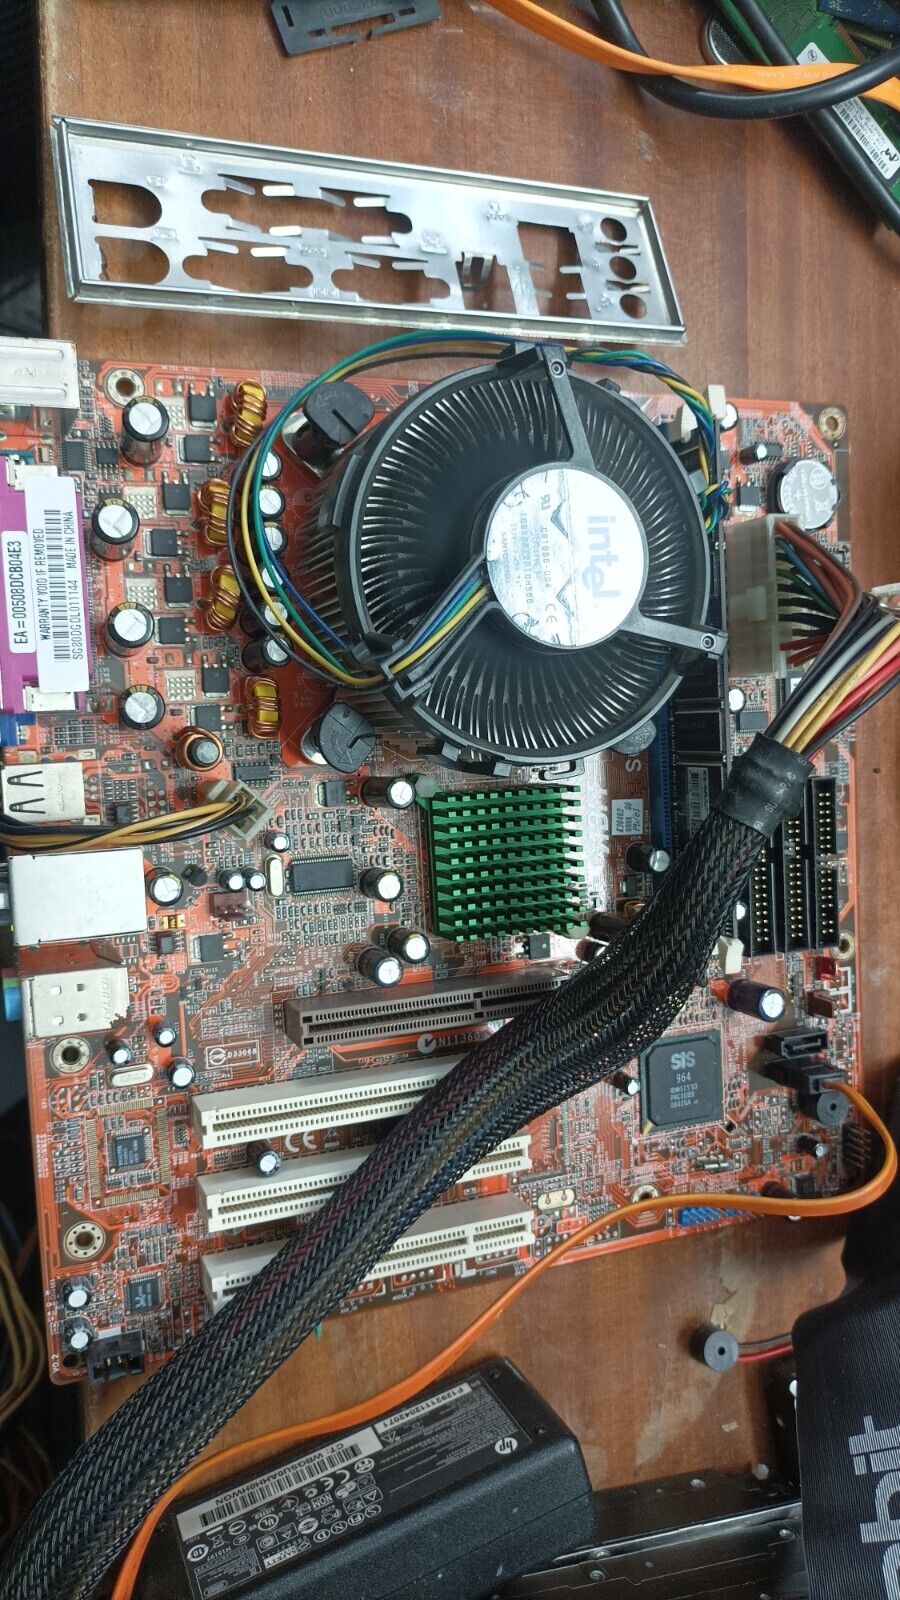 Motherboard Abit SG-80DC ,socket 775 AGP +Intel Pentium 630 +1gb ram+ I/O shield